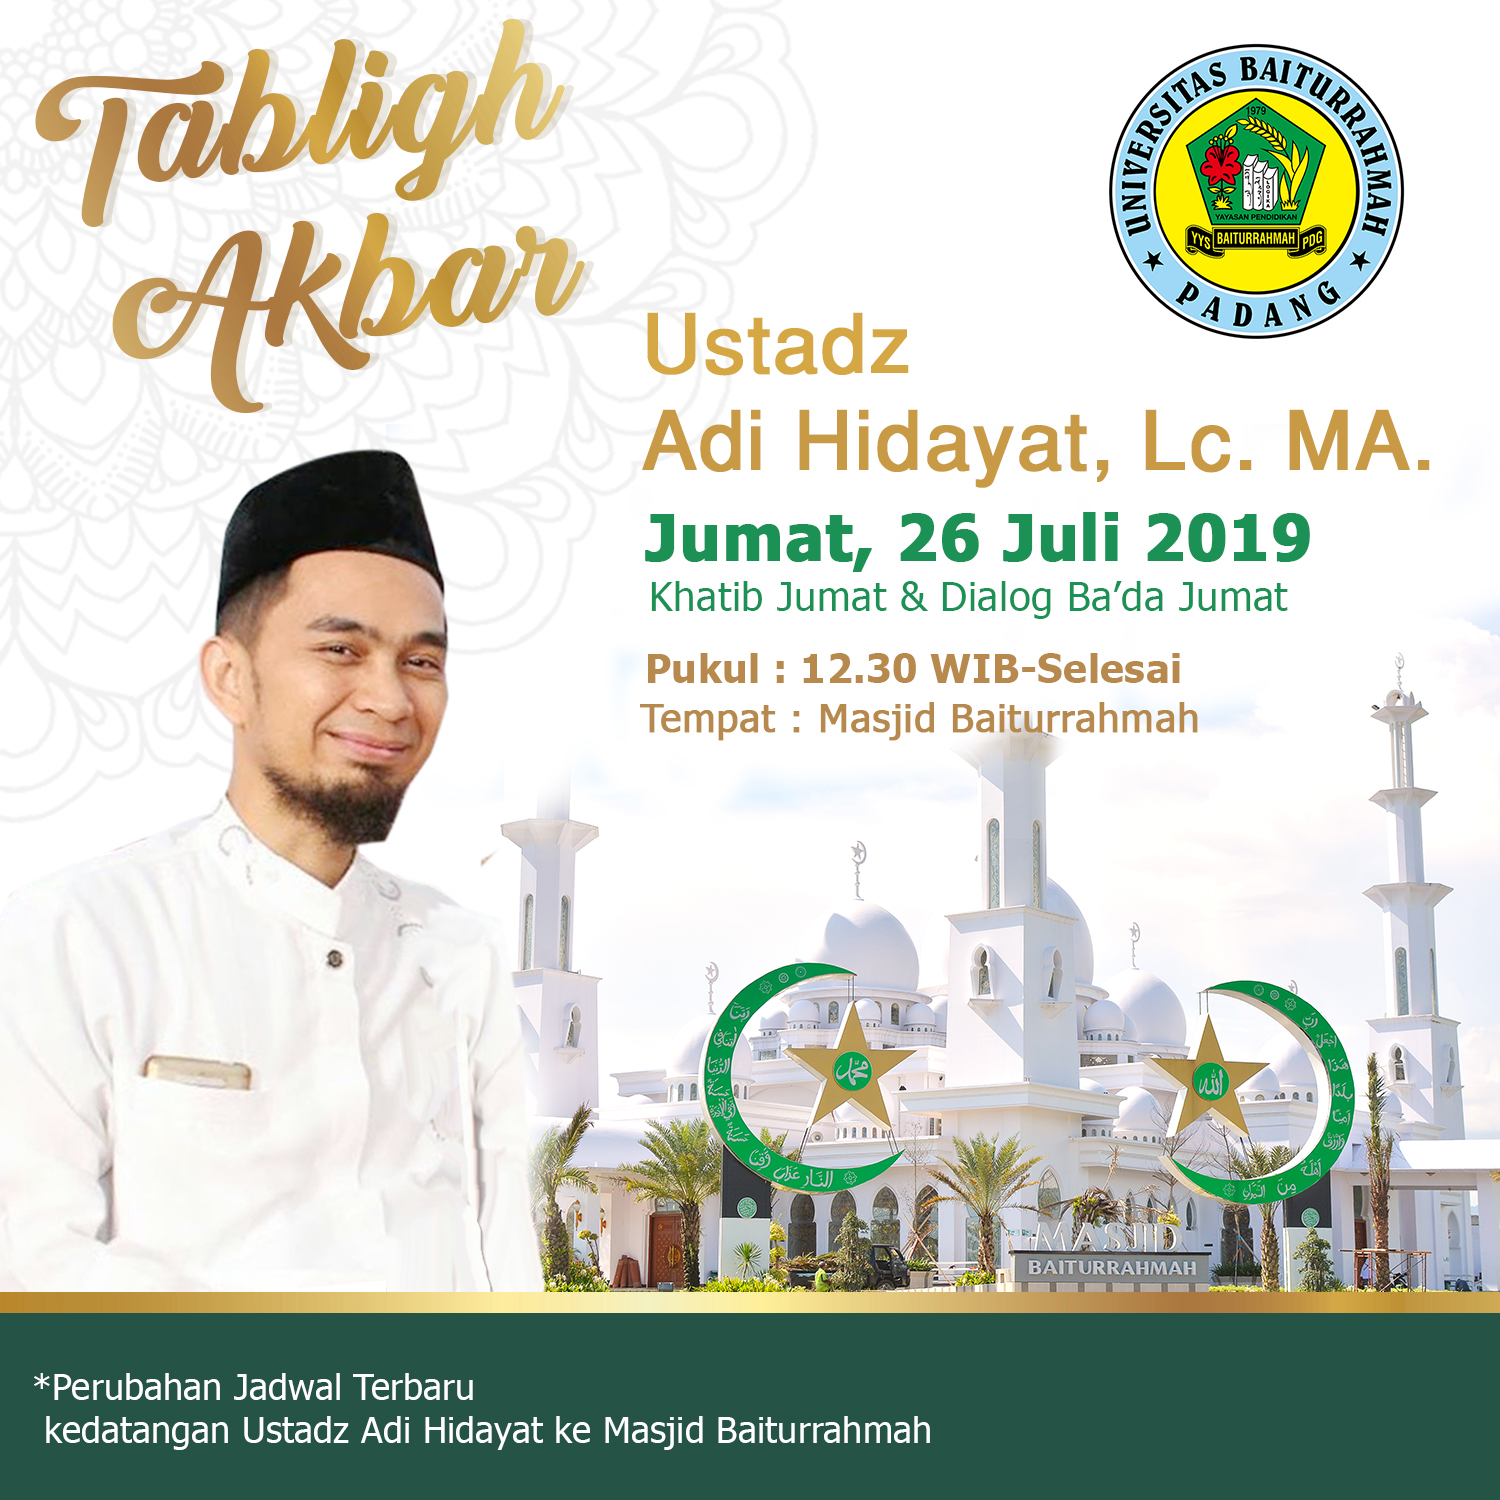 Ustad Adi Hidayat Isi Tabligh Akbar Di Masjid Baiturrahmah 26 Juli 2019 Universitas Baiturrahmah